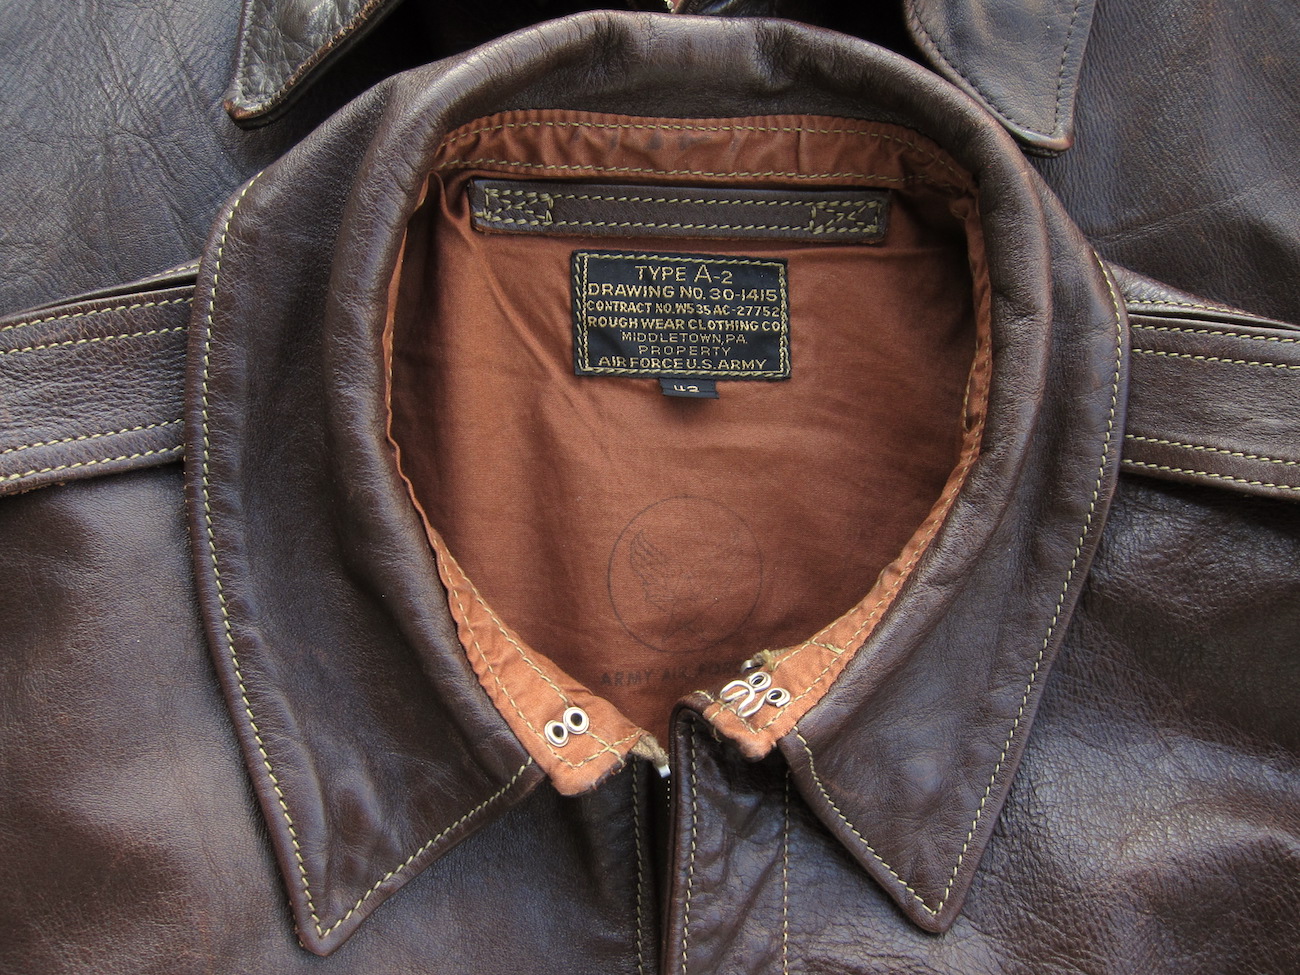 ELC and Original RW 27752 collar | Vintage Leather Jackets Forum